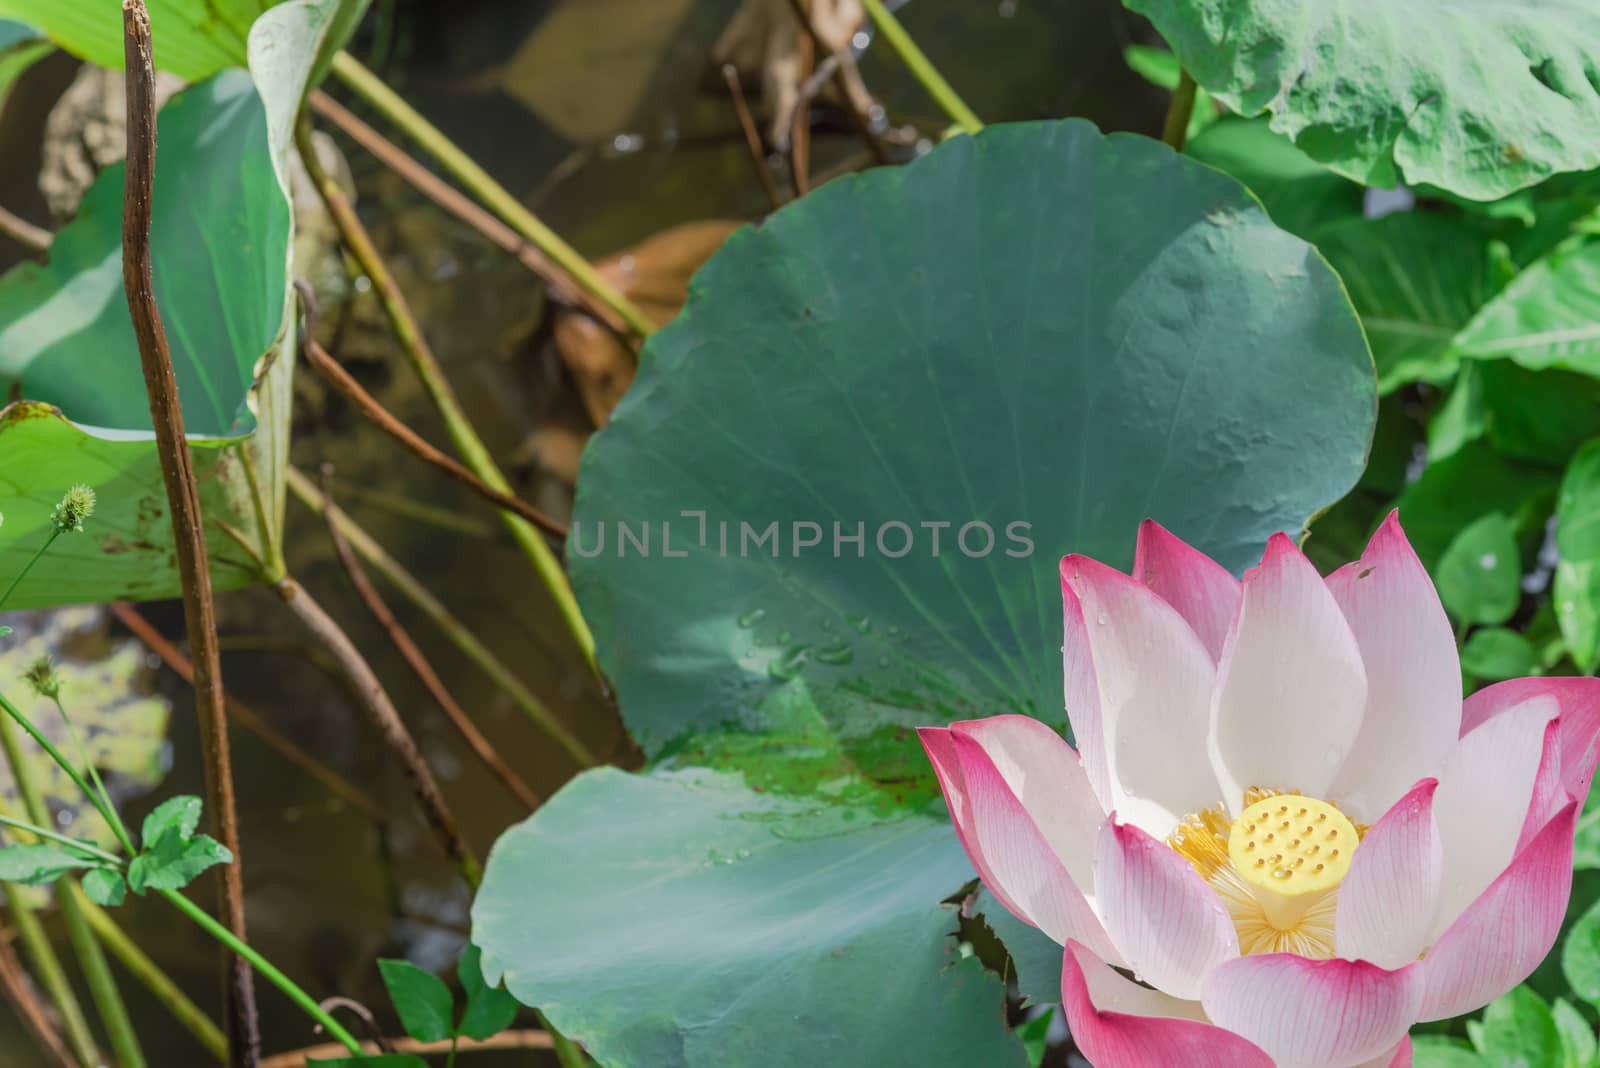 Water drops on blooming pink lotus flower with golden stamen in Vietnam by trongnguyen